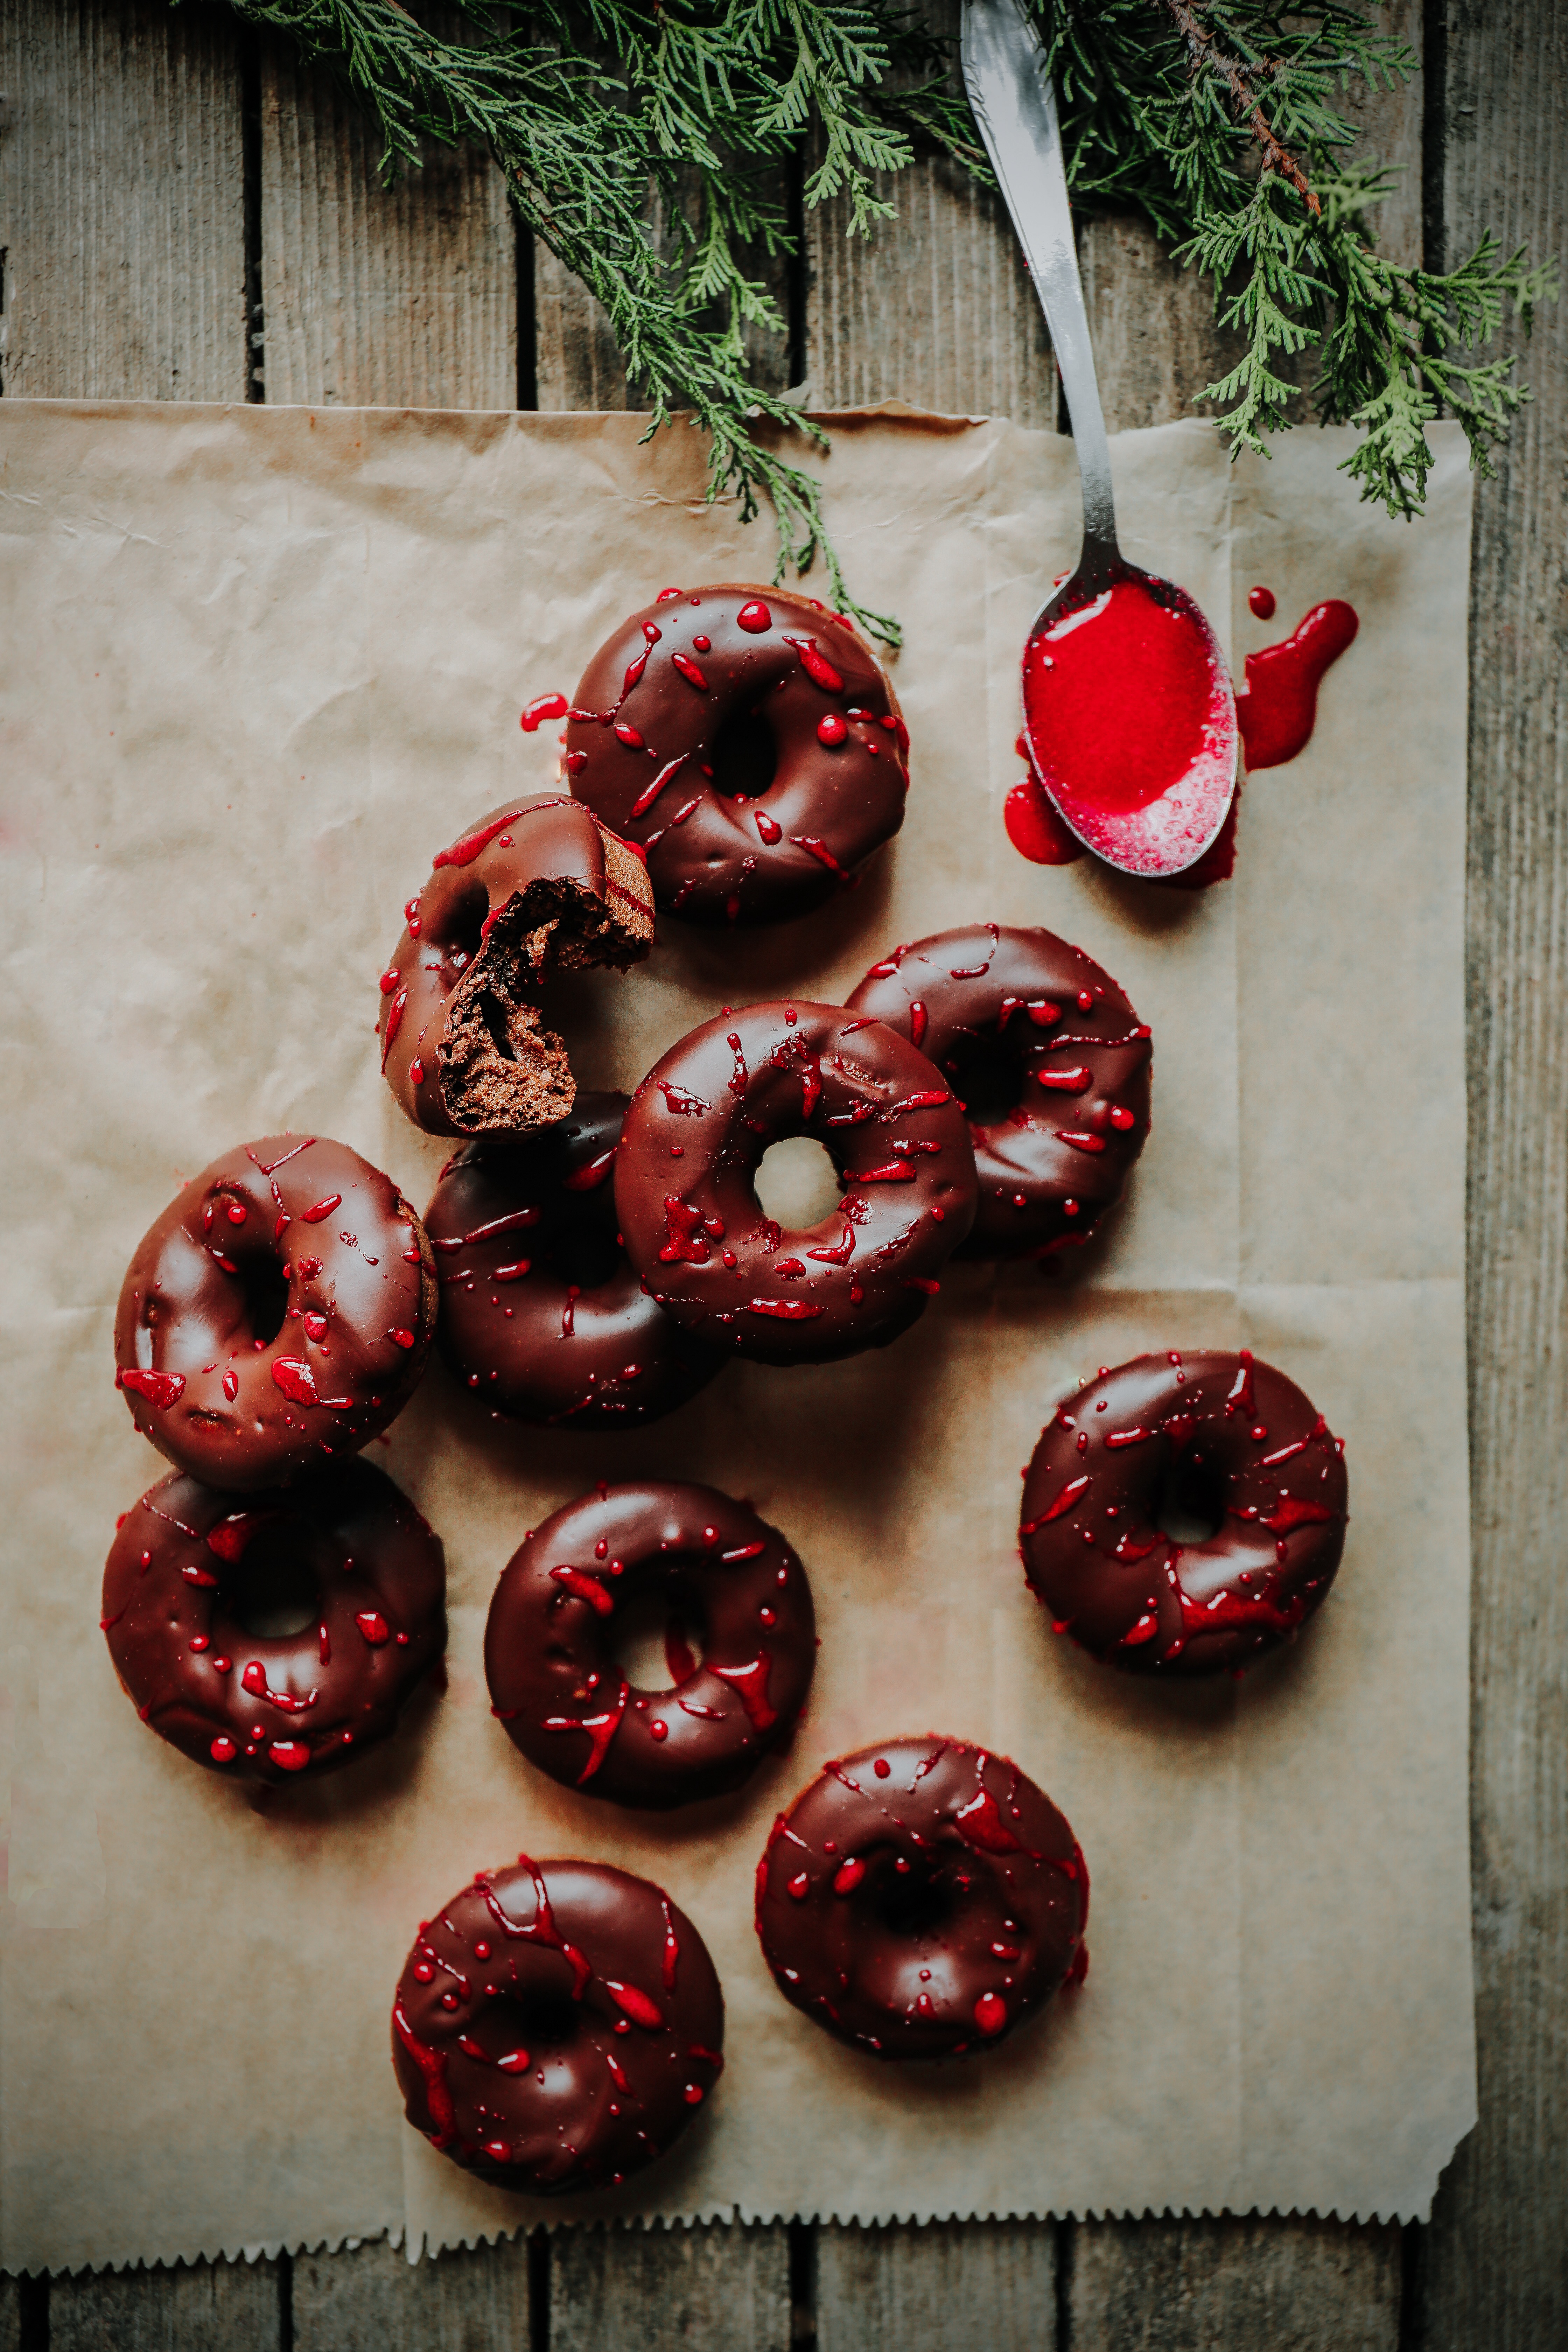 Homemade chocolate doughnut by Daniel Cuklev